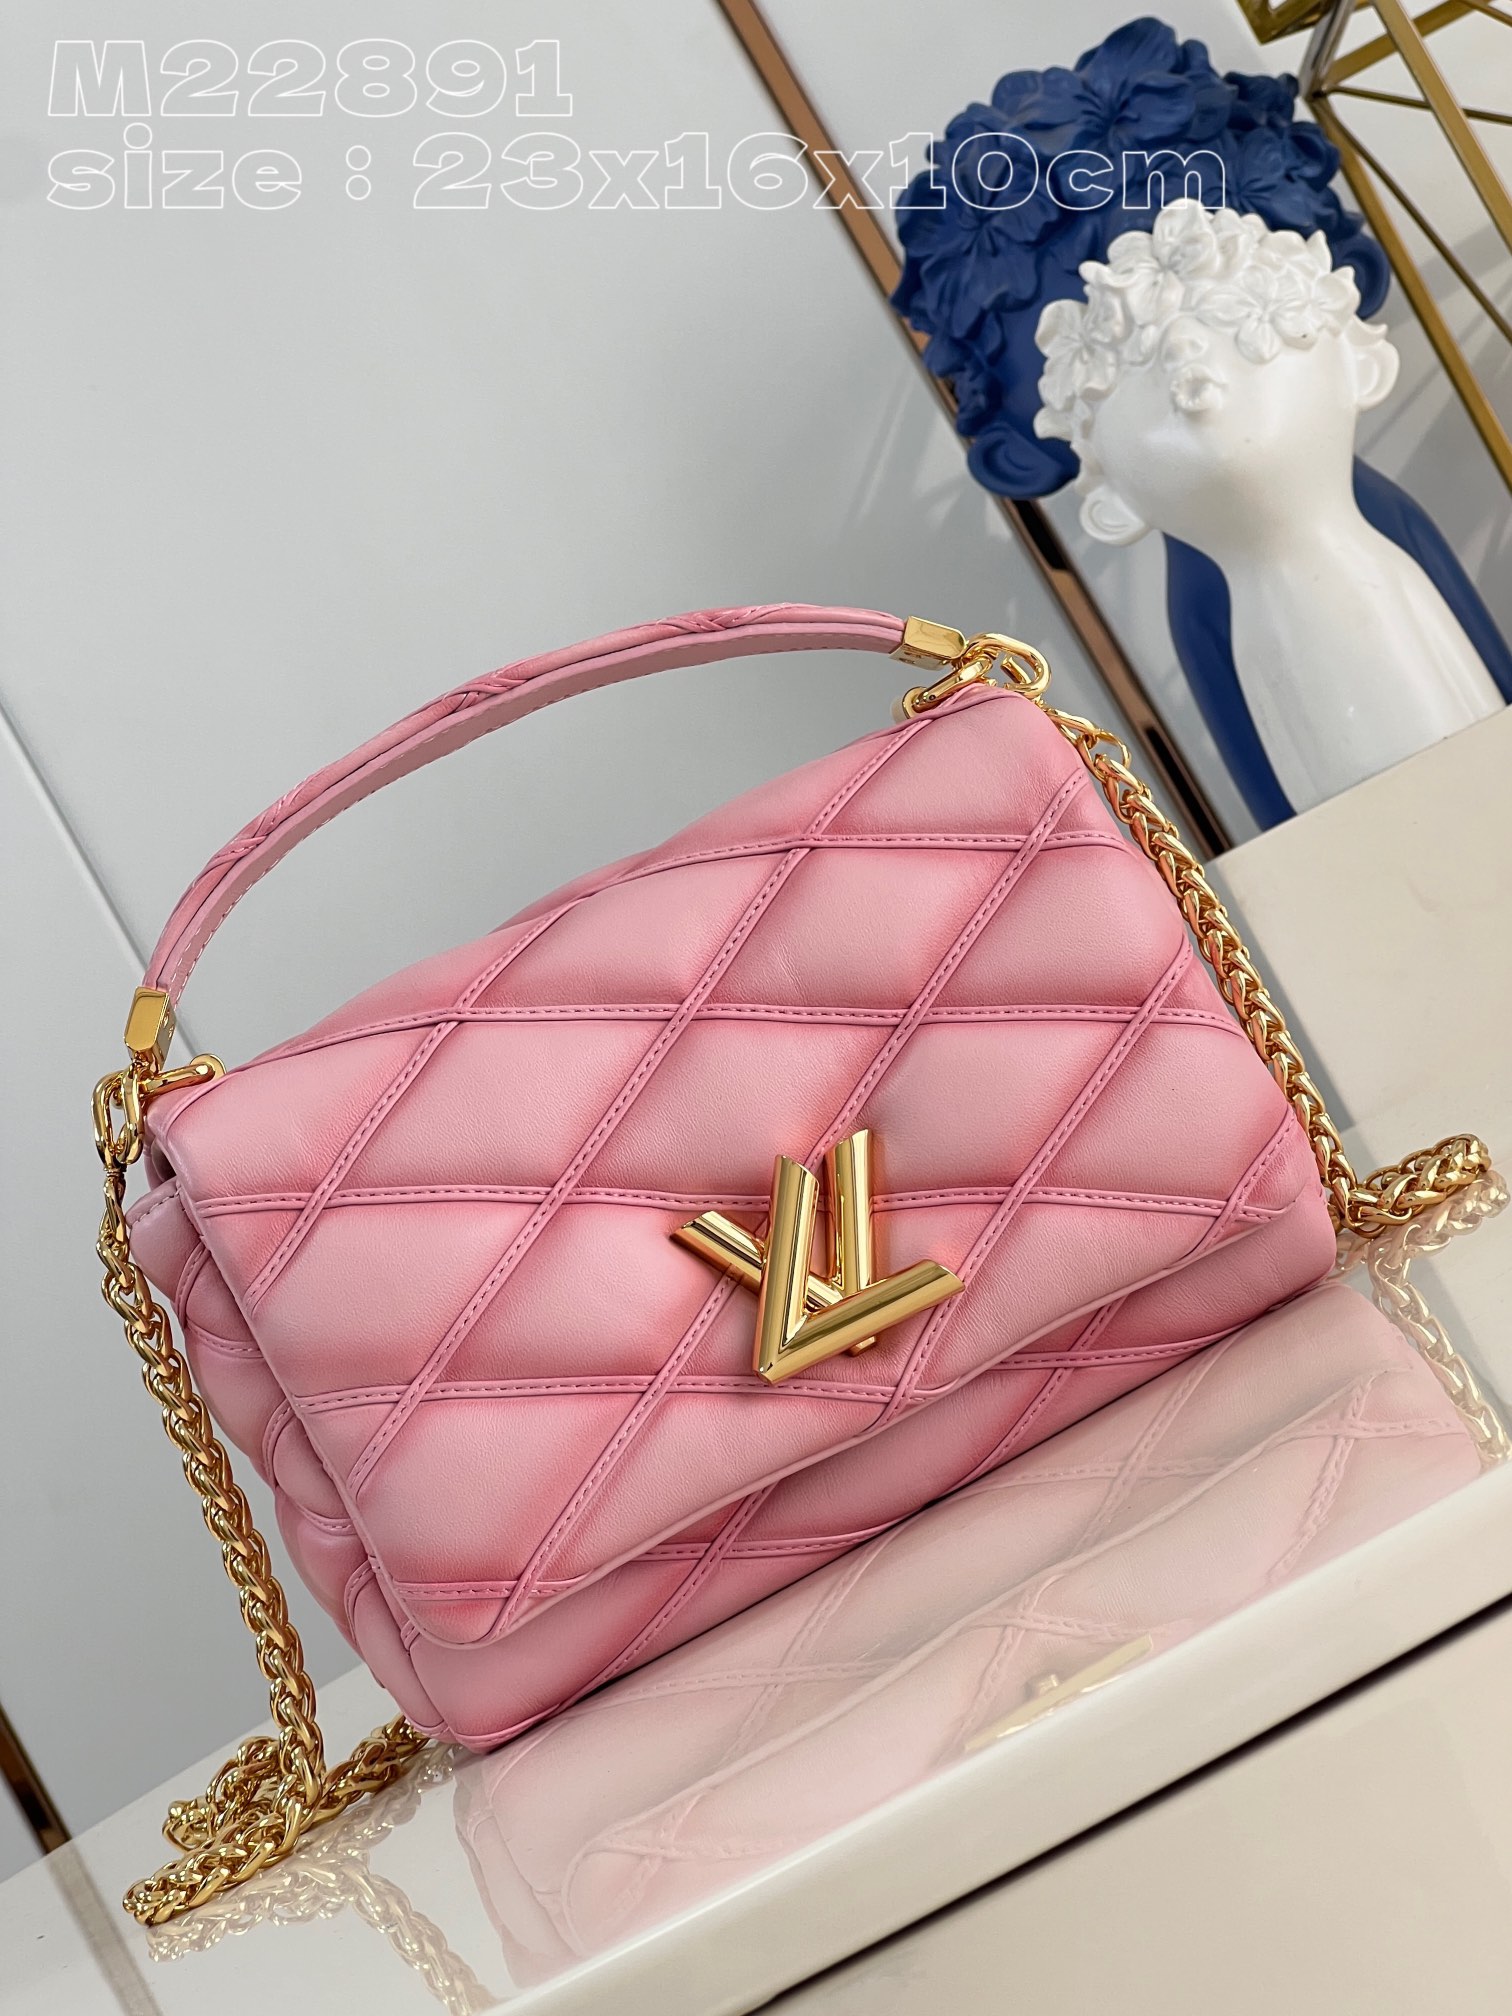 We Curate The Best
 Louis Vuitton Bags Handbags Pink Sheepskin LV Twist Chains M22891